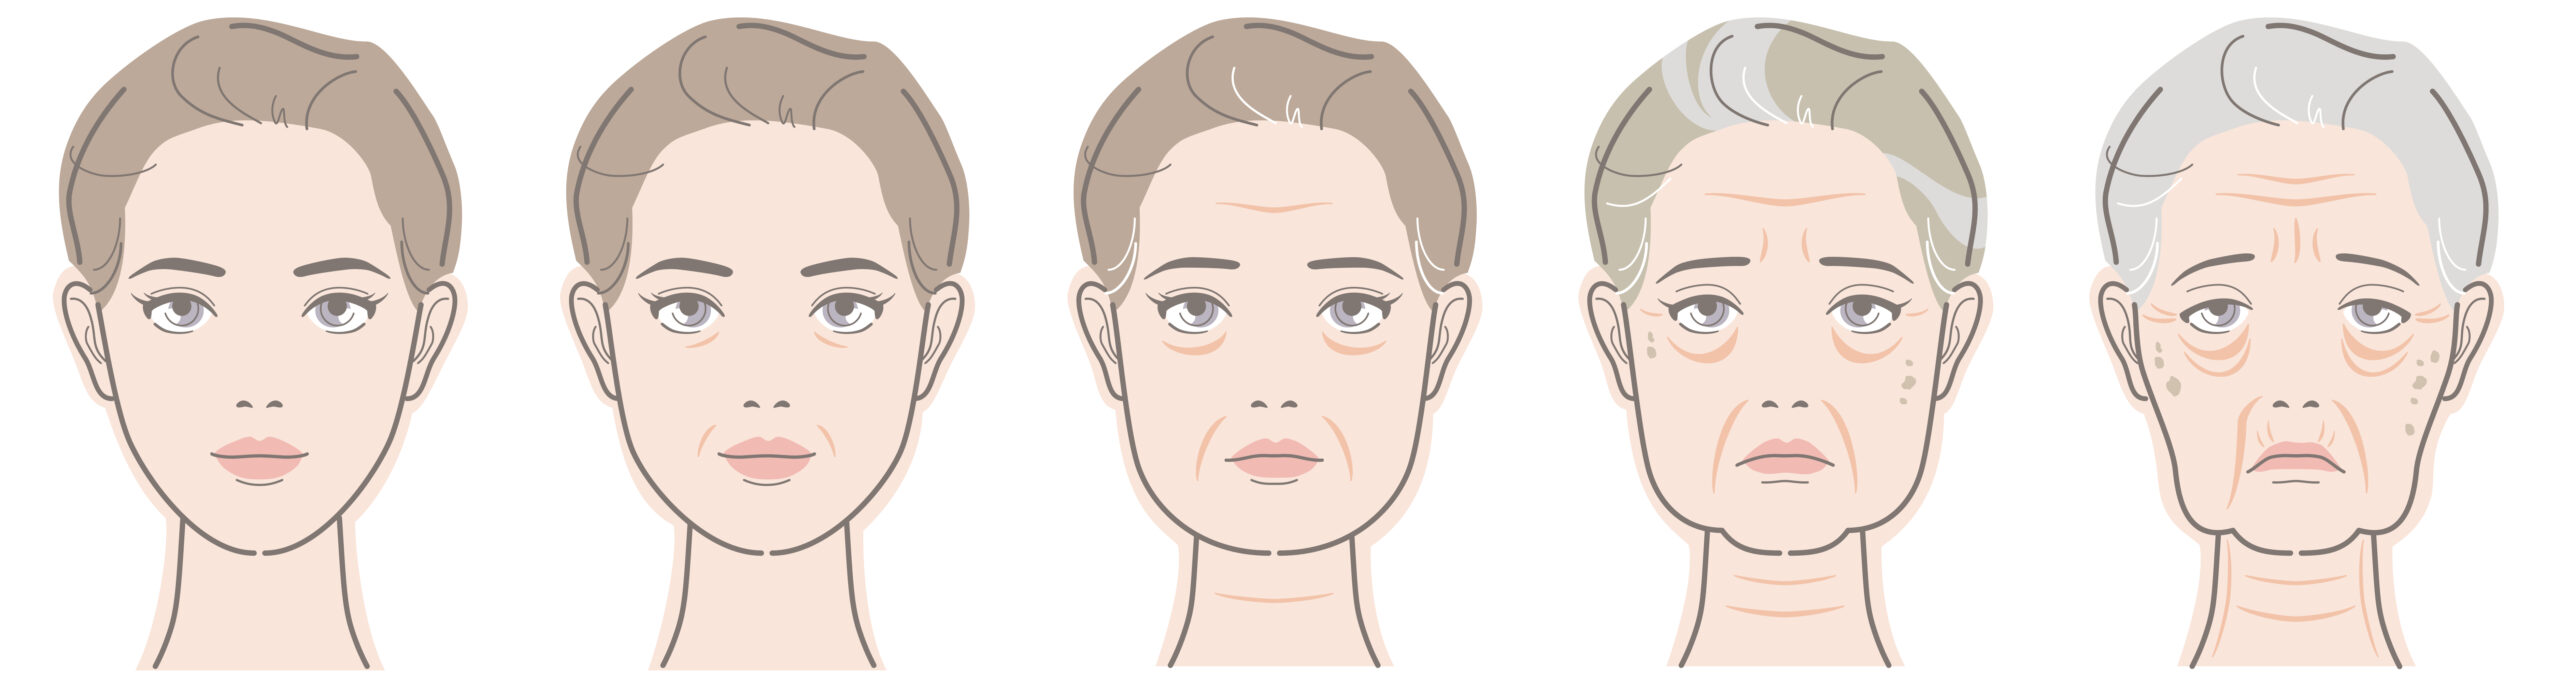 Aging promjene na licu i vratu